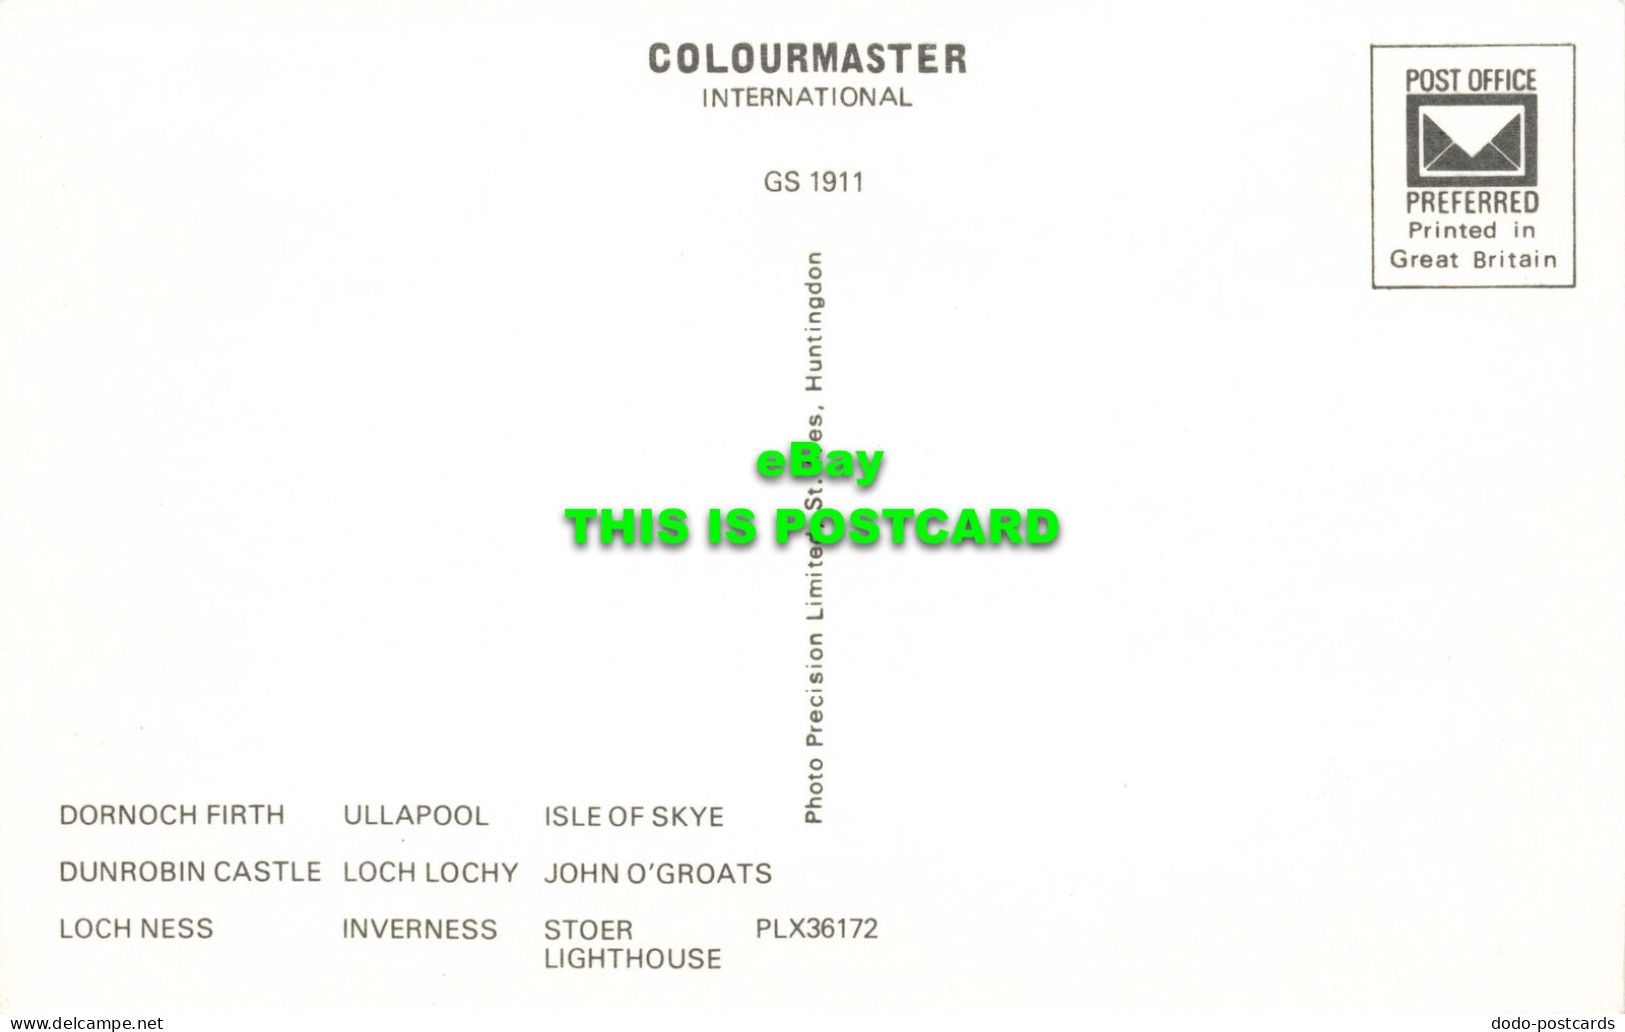 R567069 Highlands. Colourmaster International. Precision. PLX36172. Multi View - World